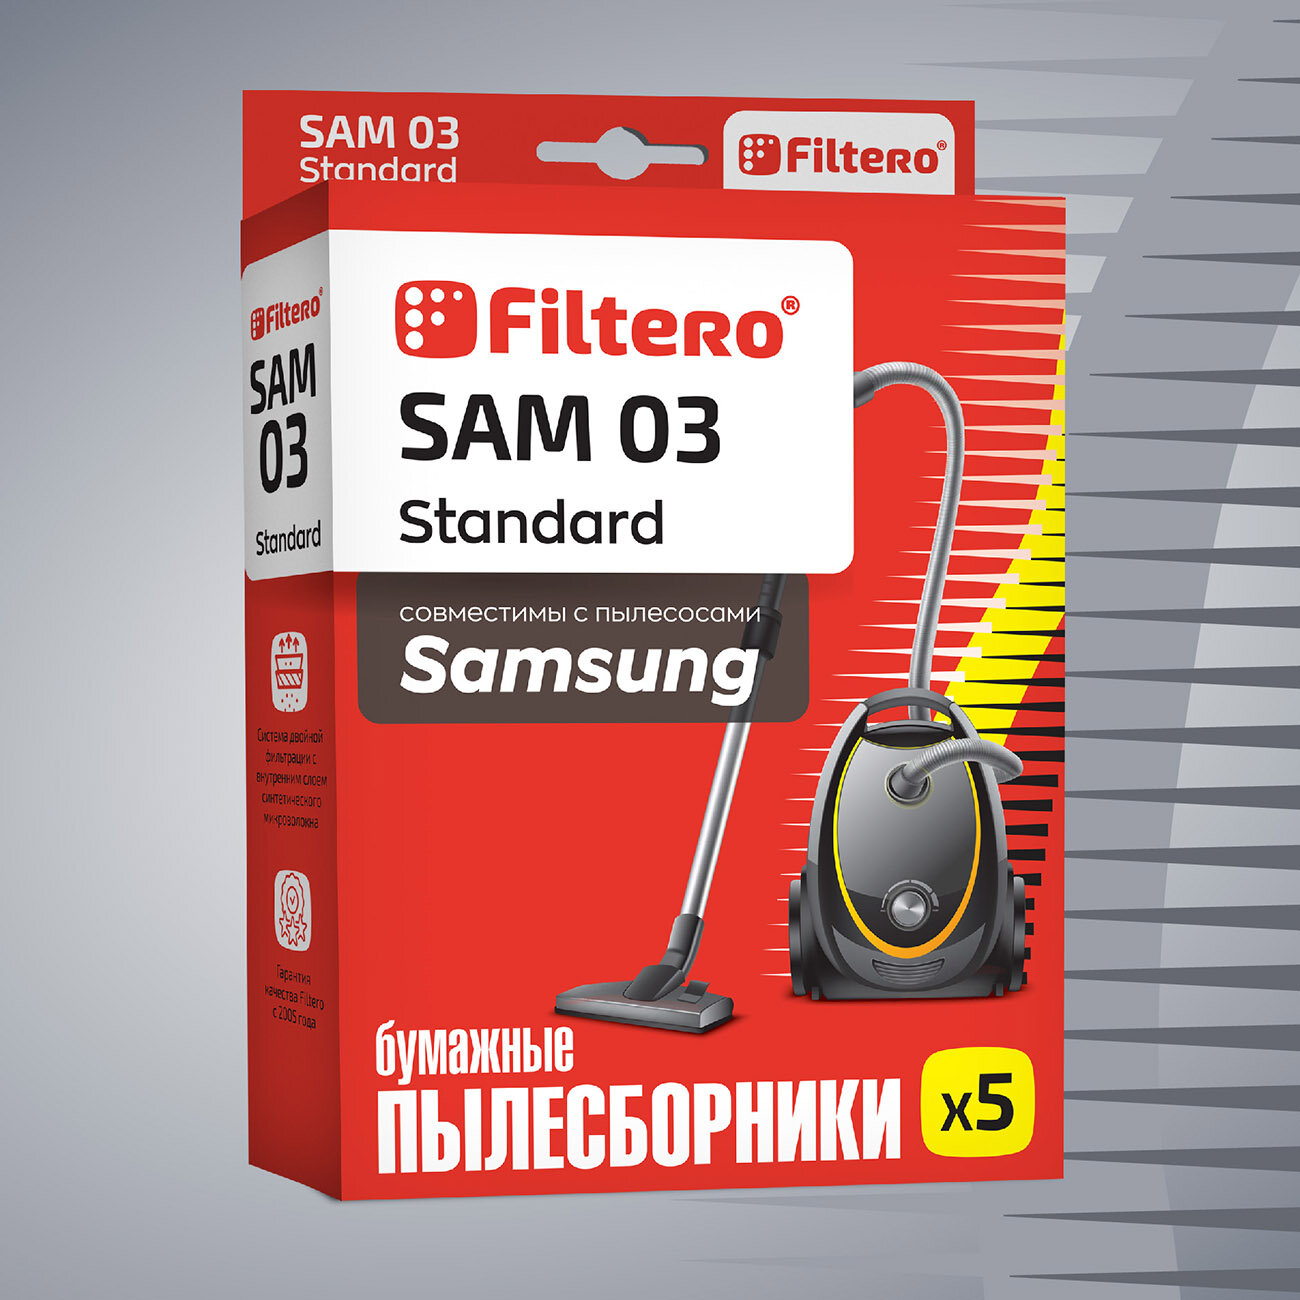 Пылесборники Filtero SAM 03 (5) Standard